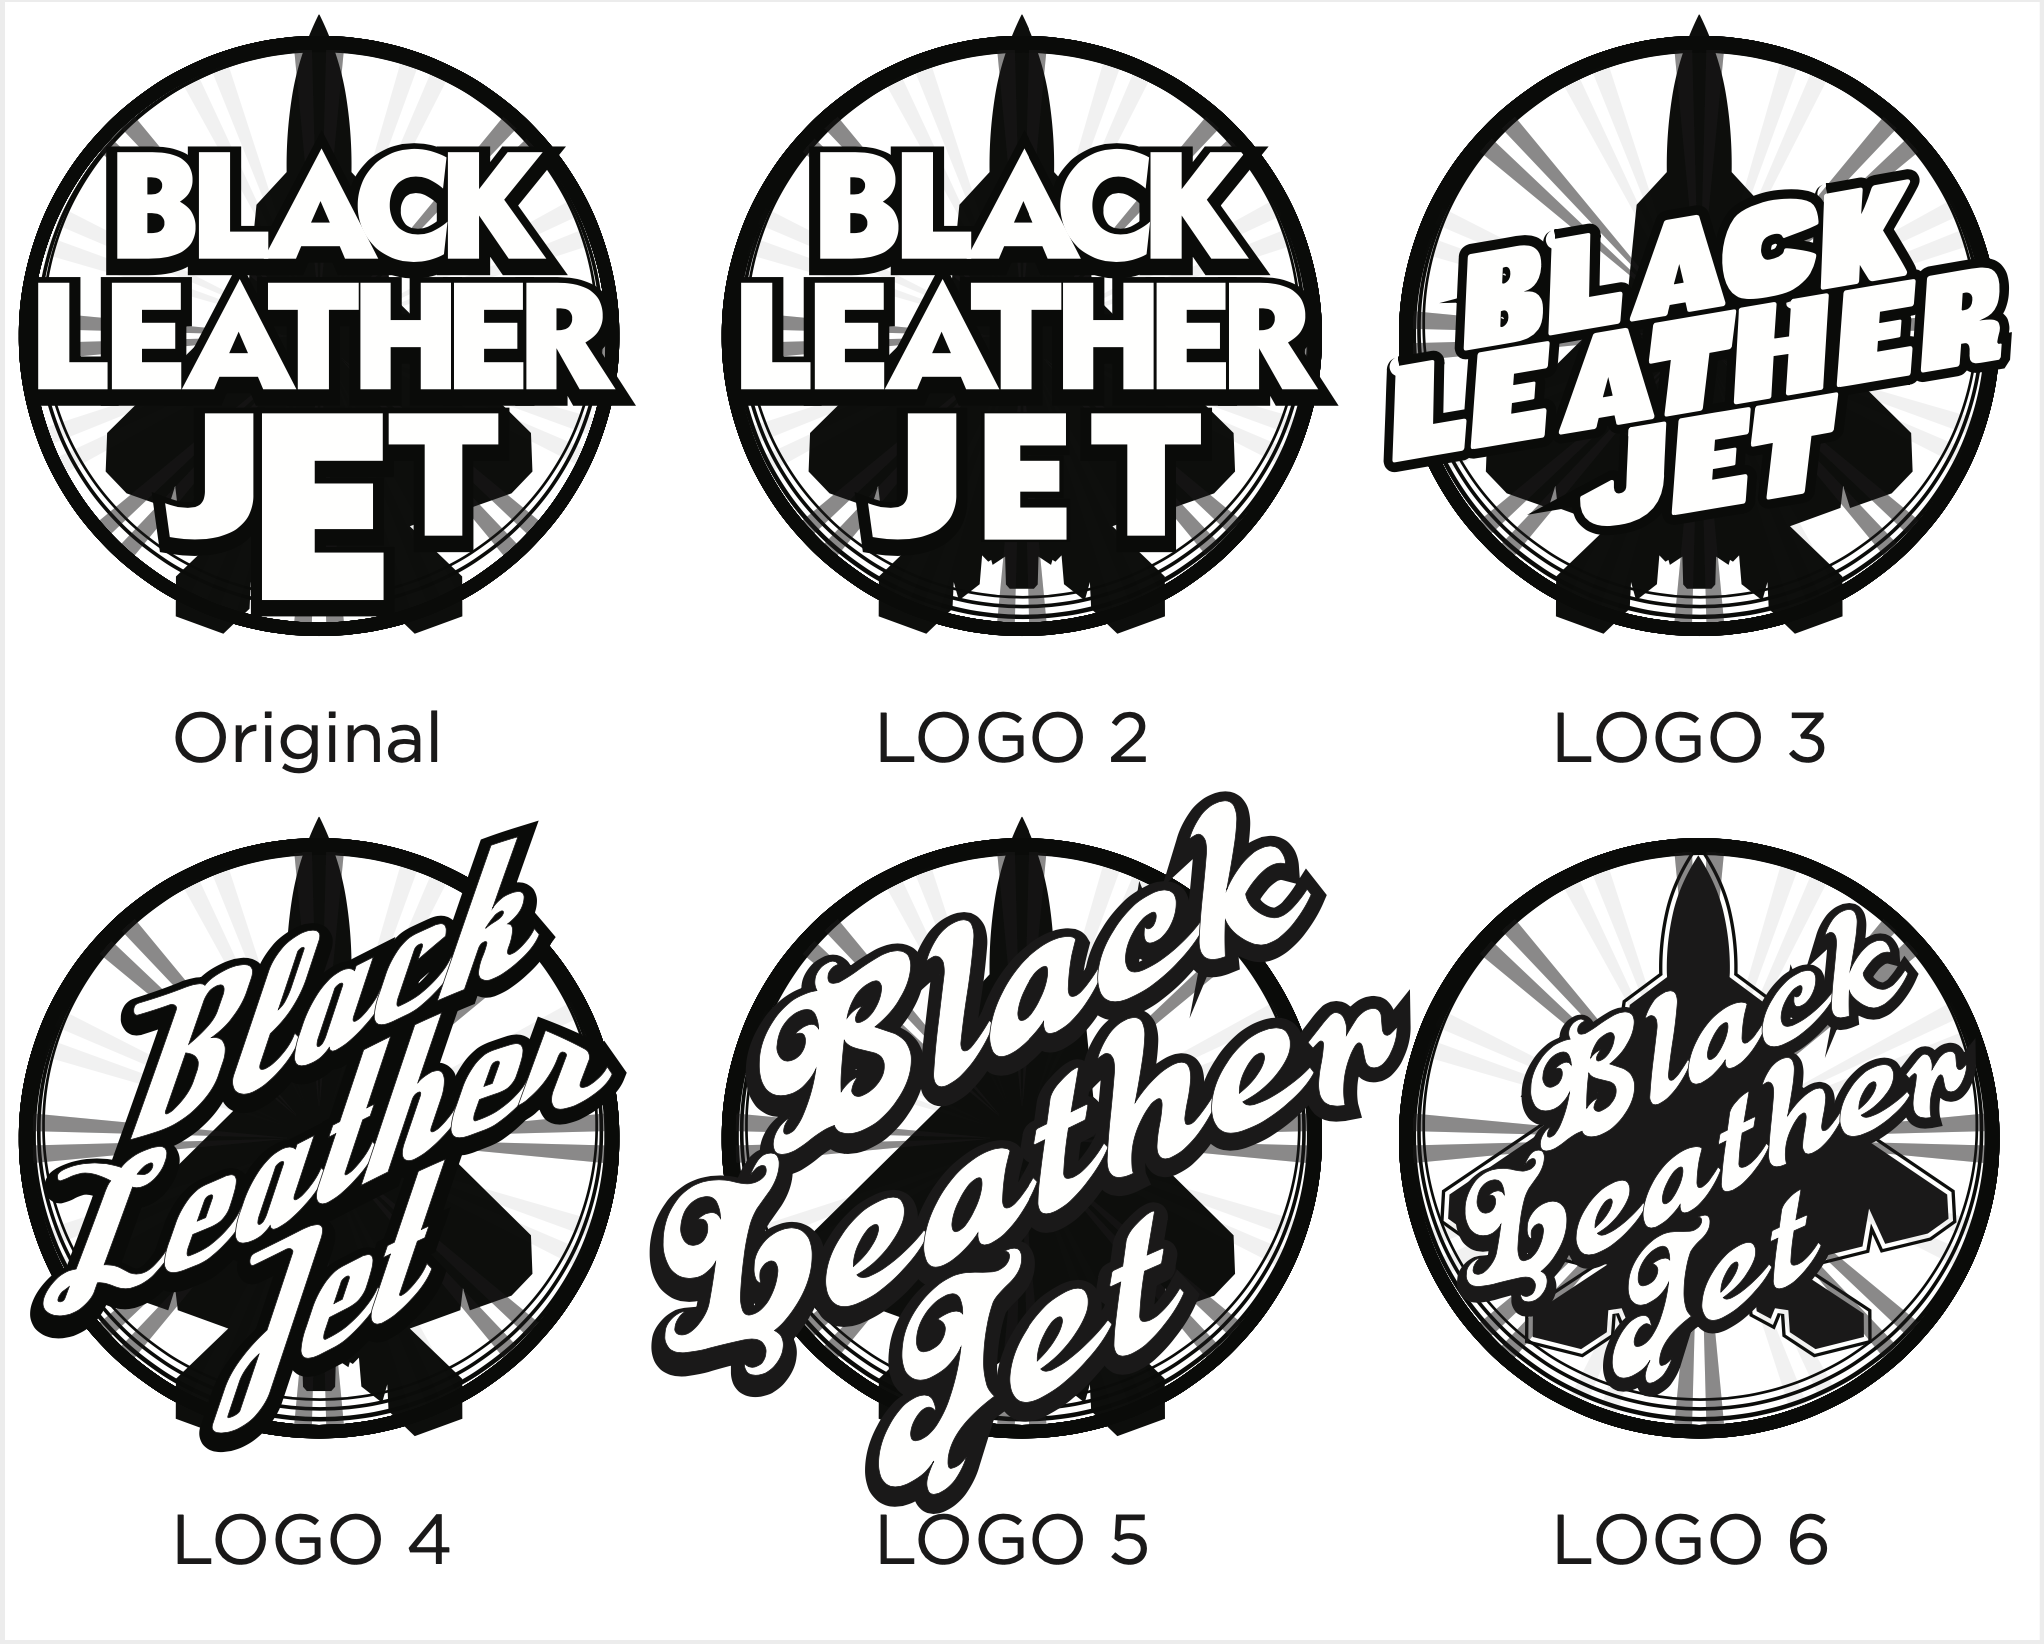 Black Leather Jet